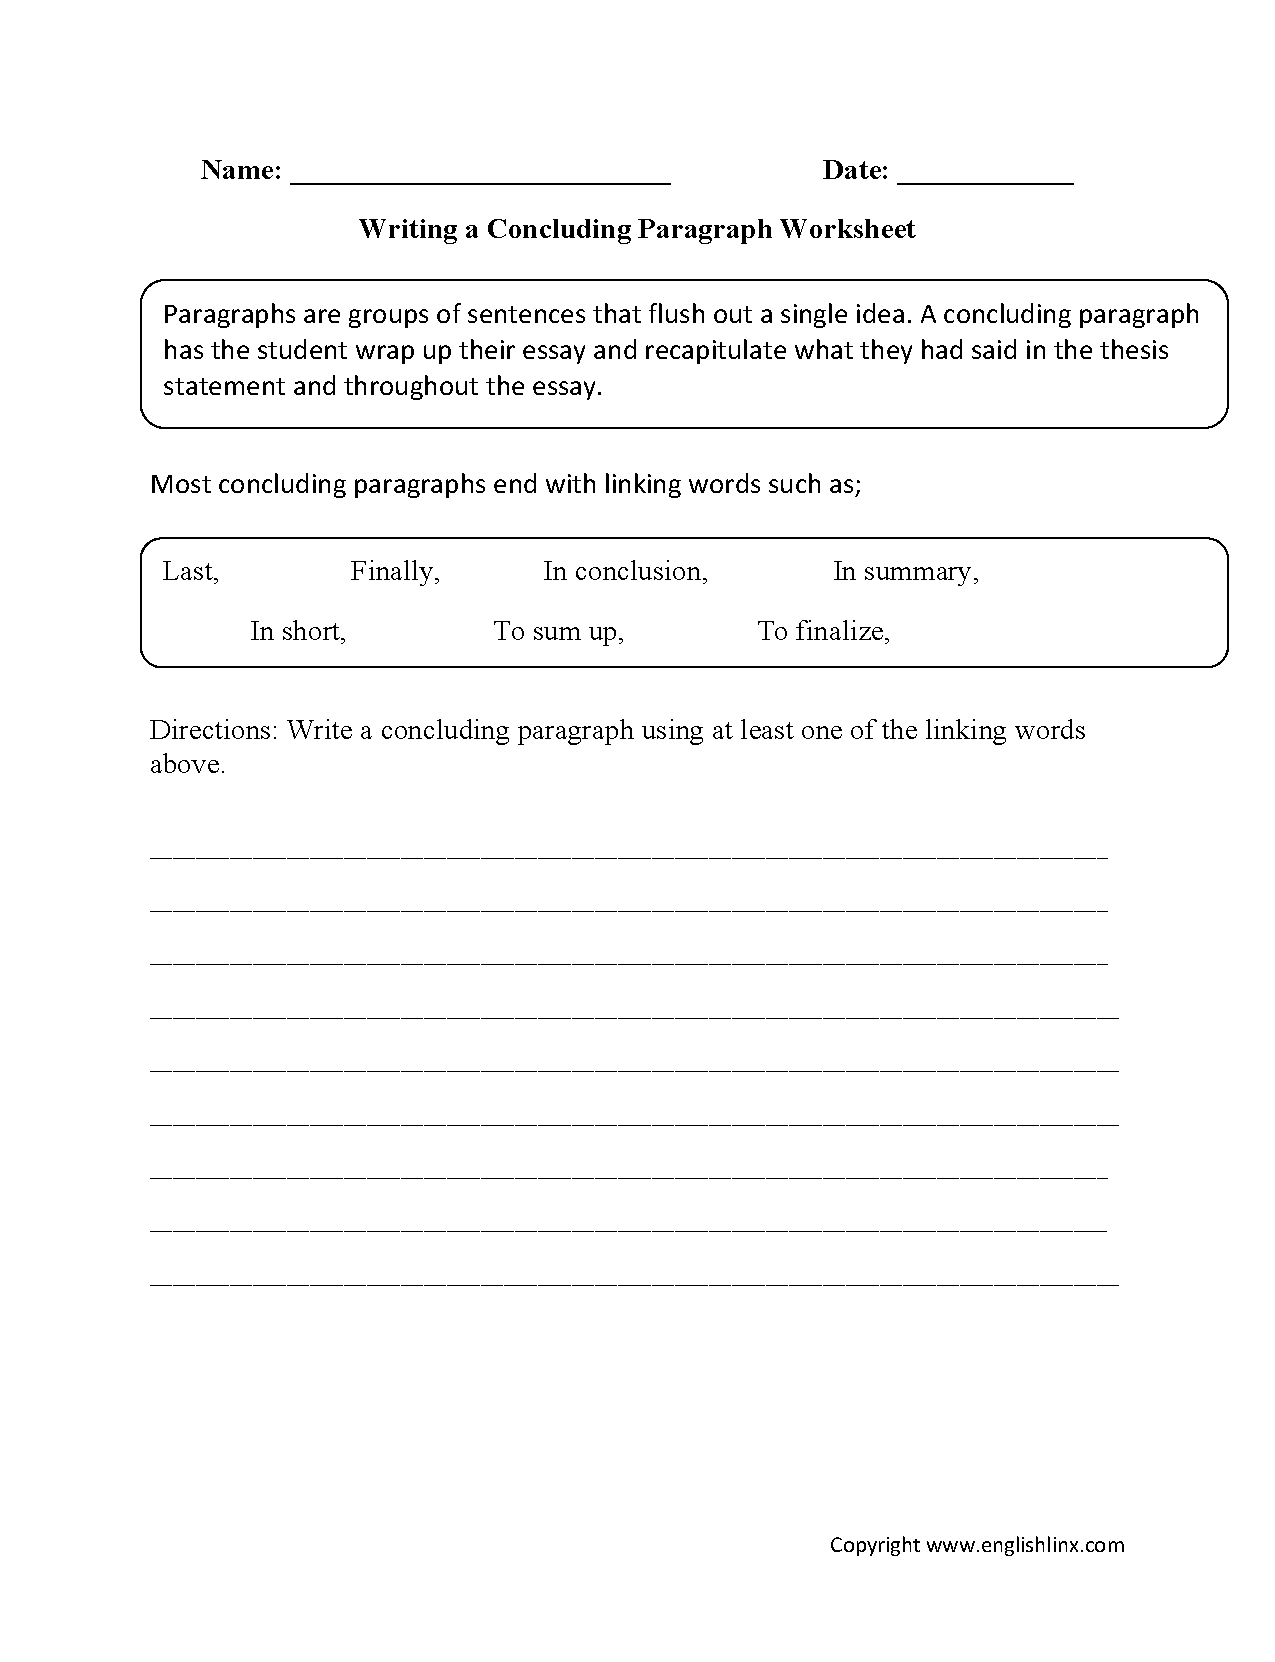 paragraph-worksheets